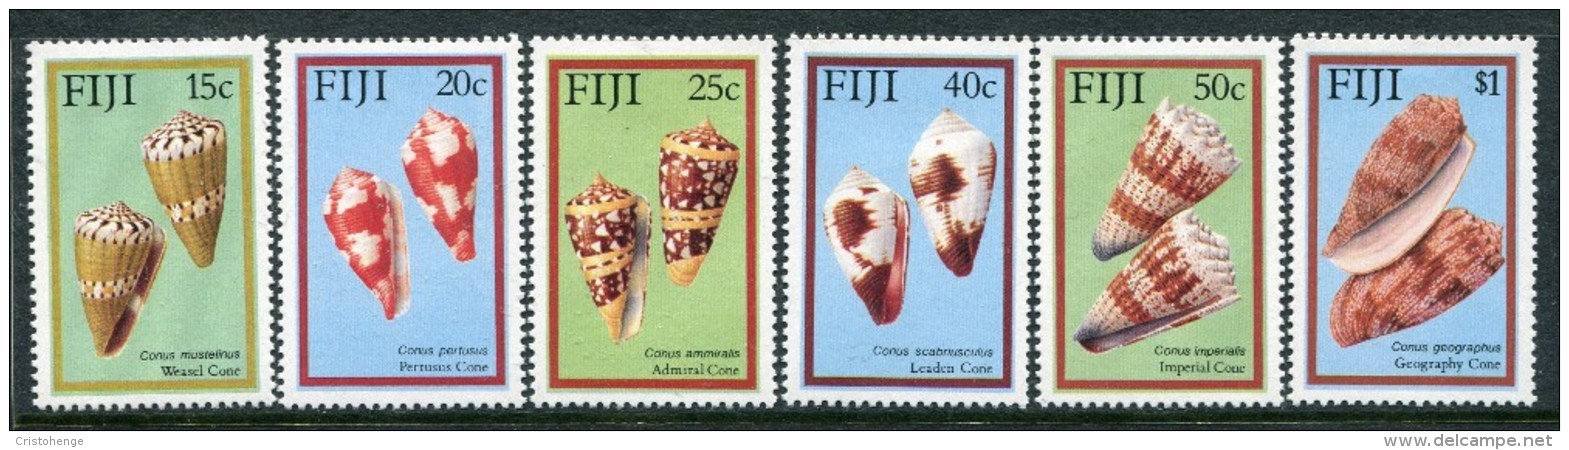 Fiji 1987 Cone Shells Of Fiji Set LHM - Fiji (1970-...)